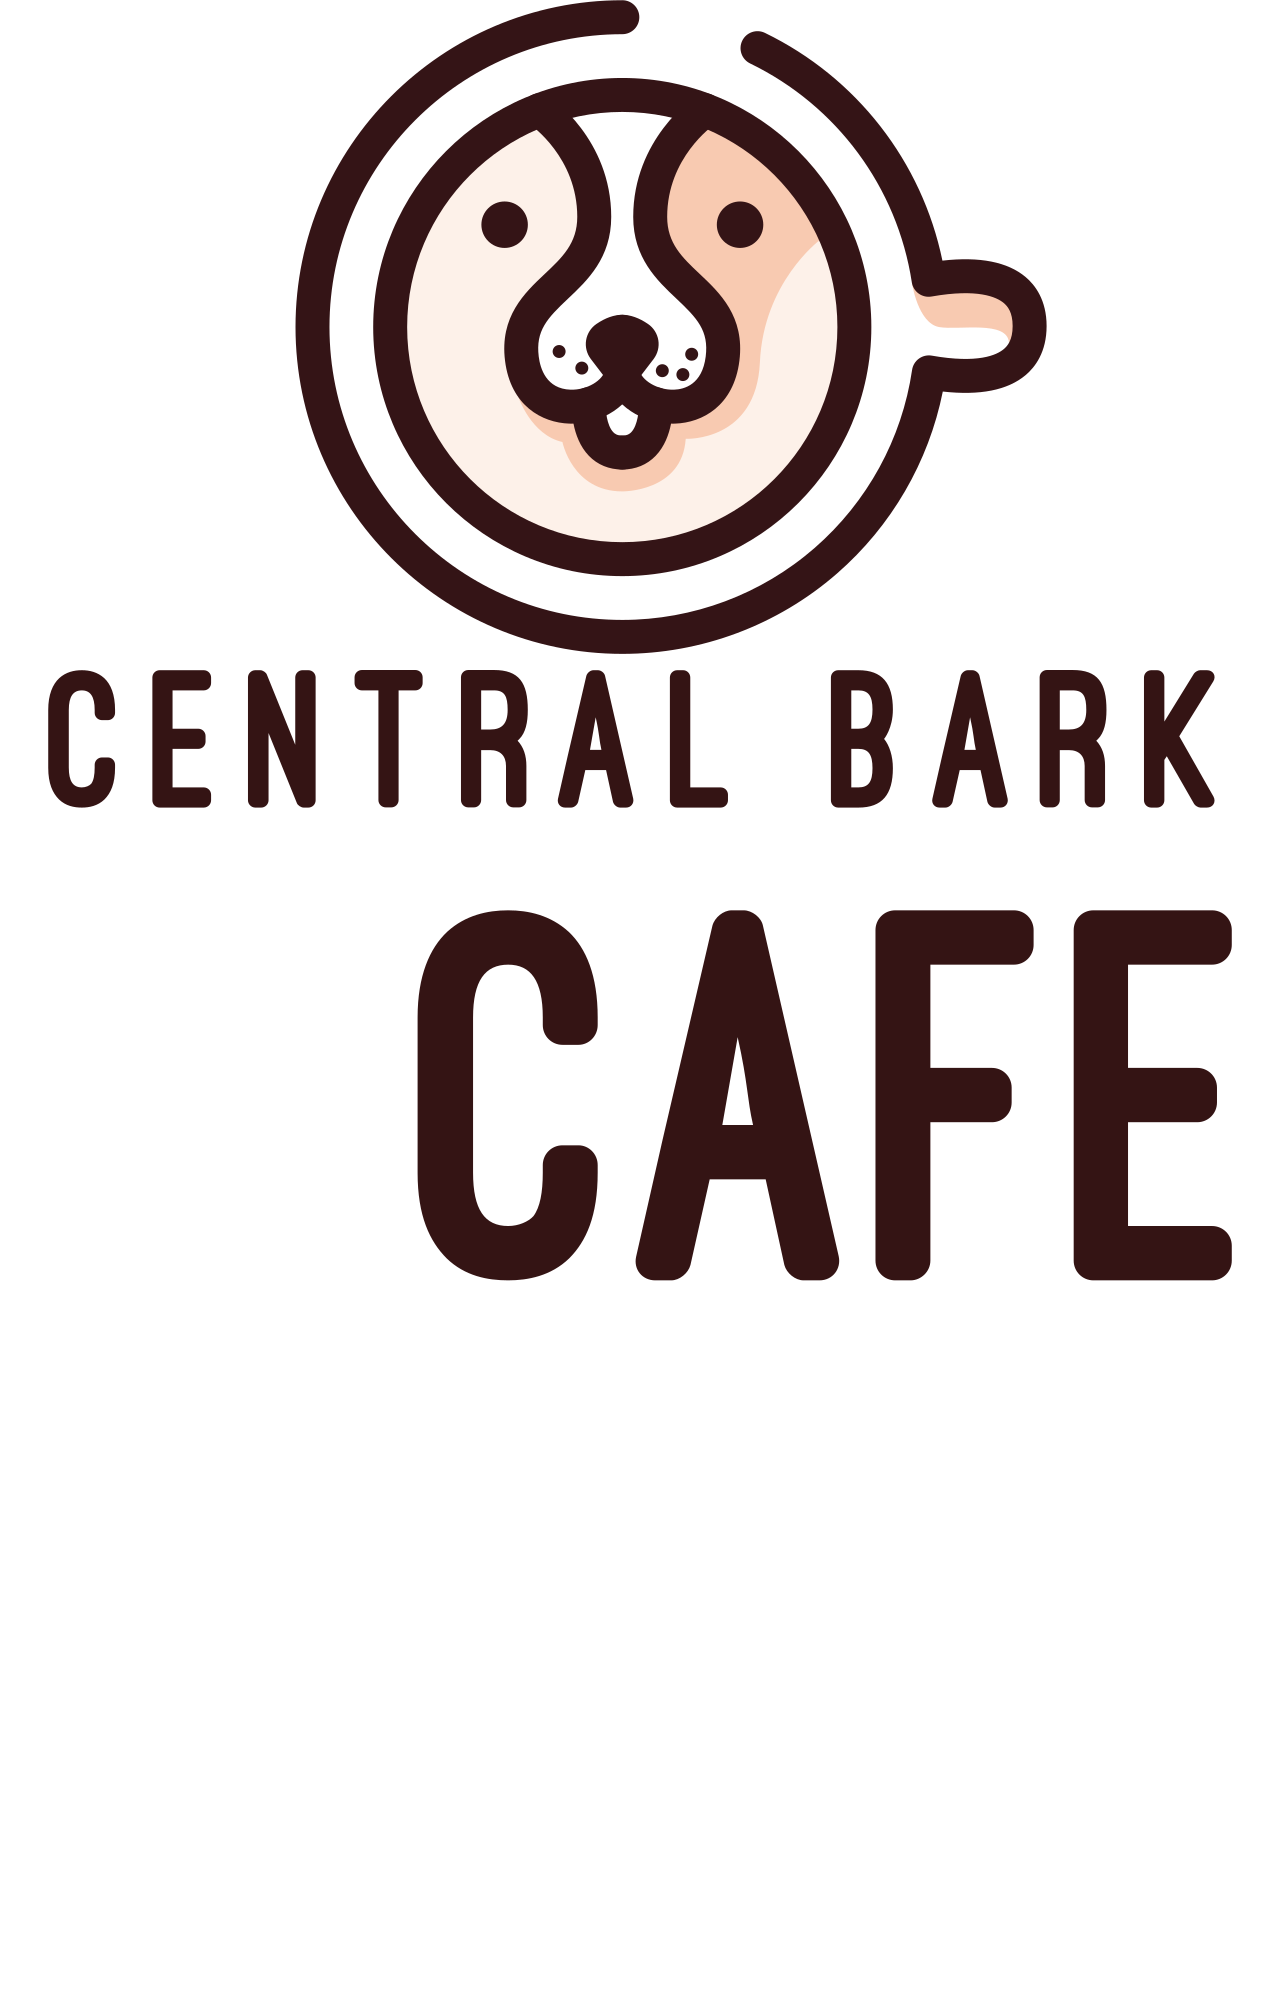 Central bark 's logo